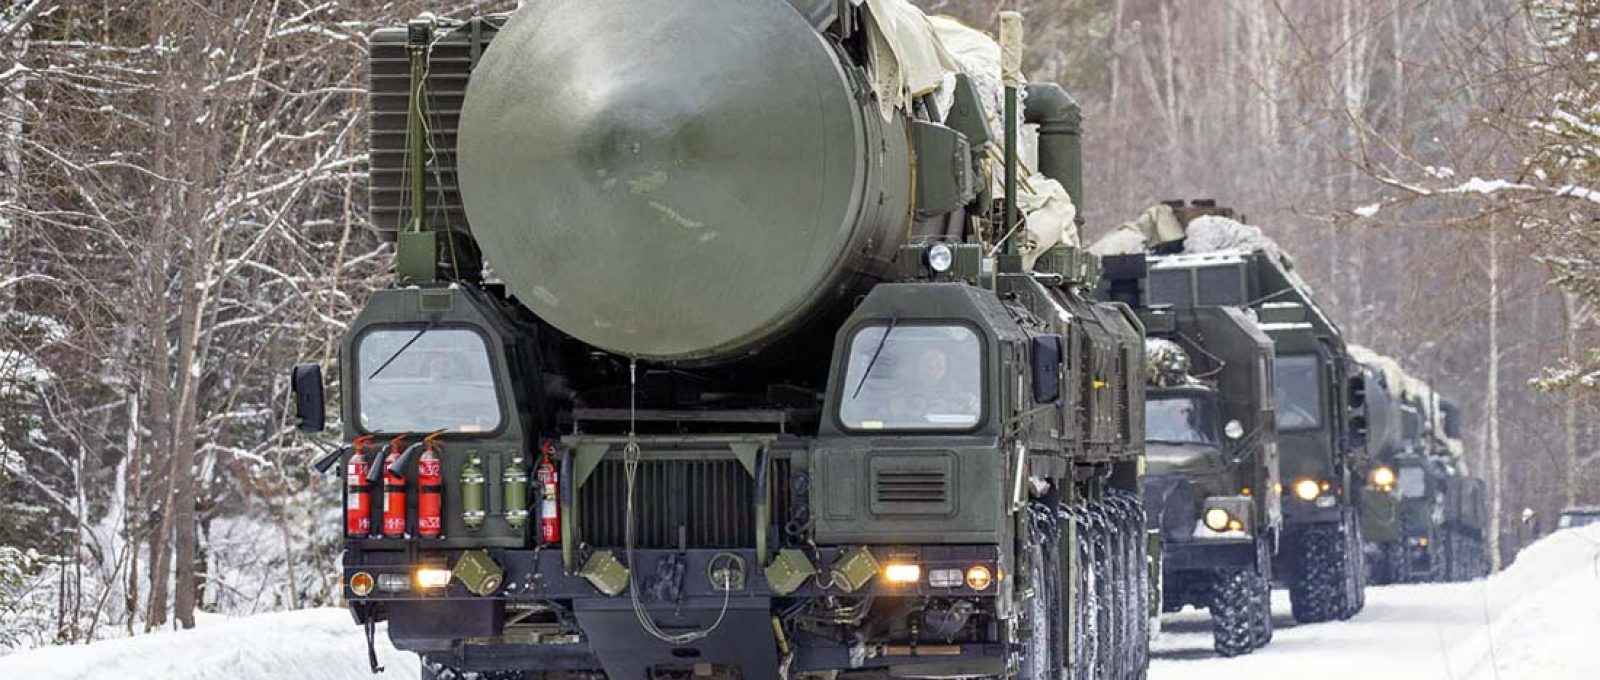 Transportador-montador-lançador RS-24 Yars (CSIS Missile Defense Project).